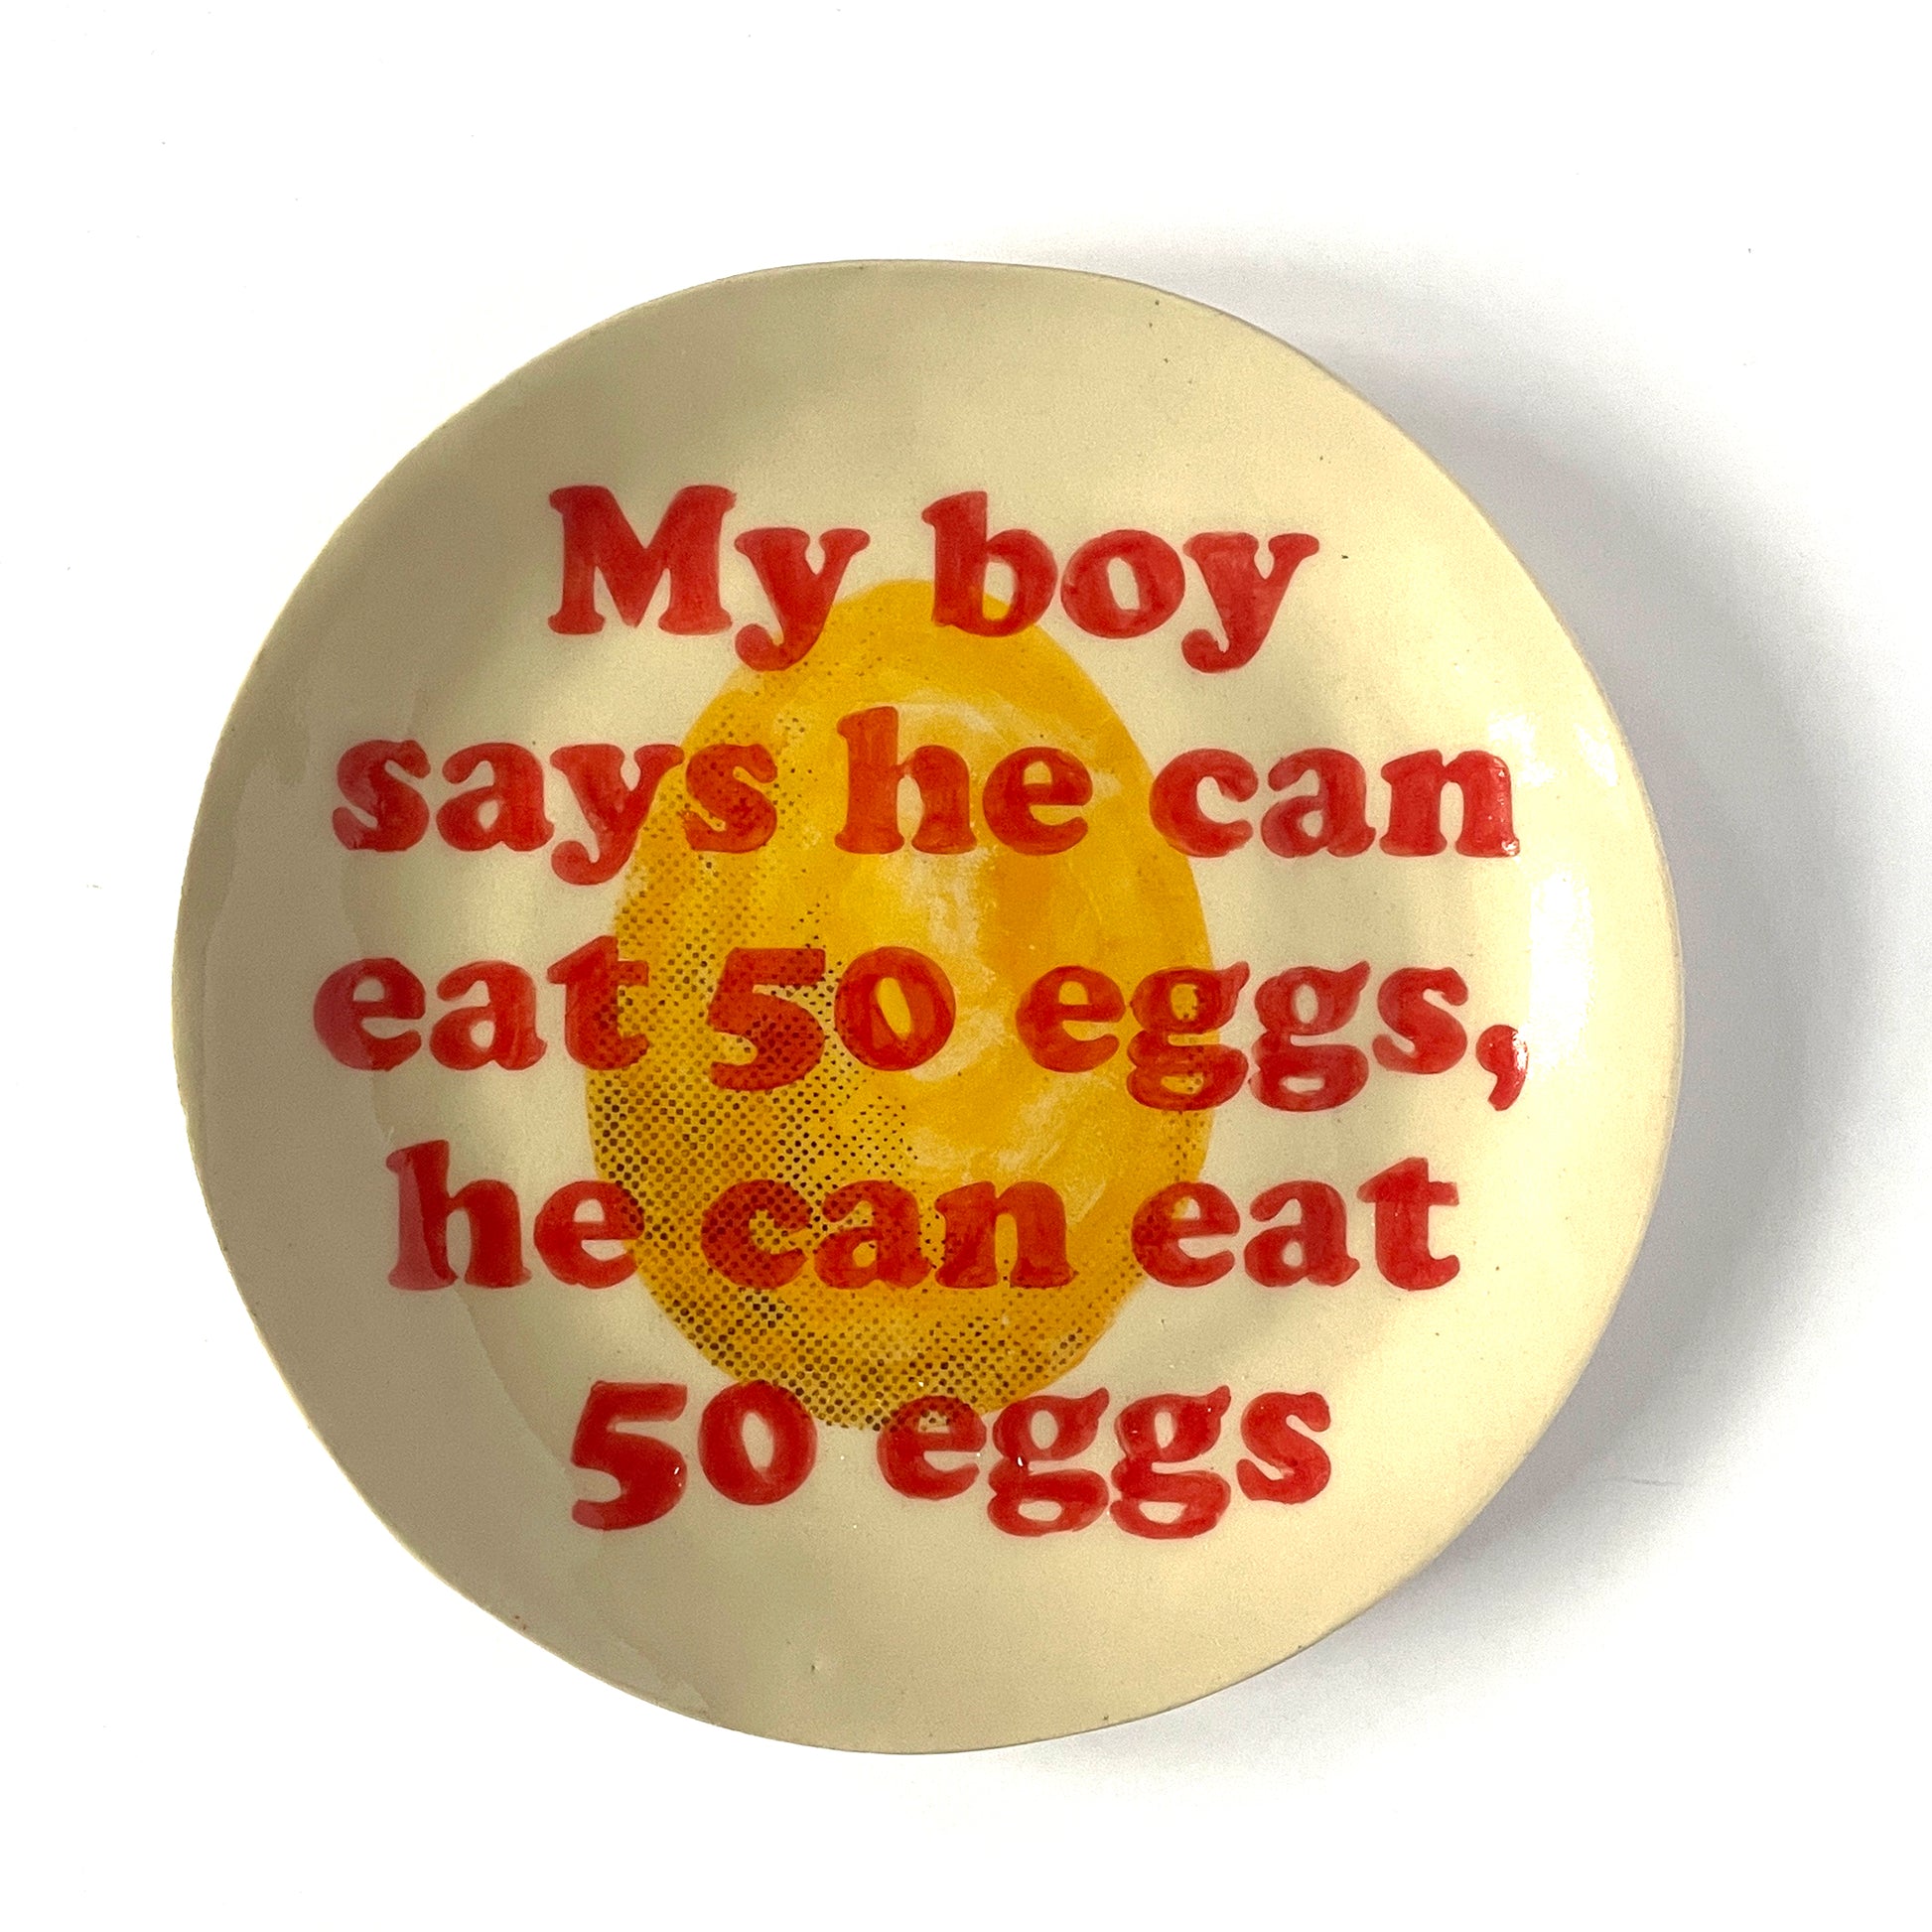 Cool Hand Luke – My boy says he can eat 50 eggs plate